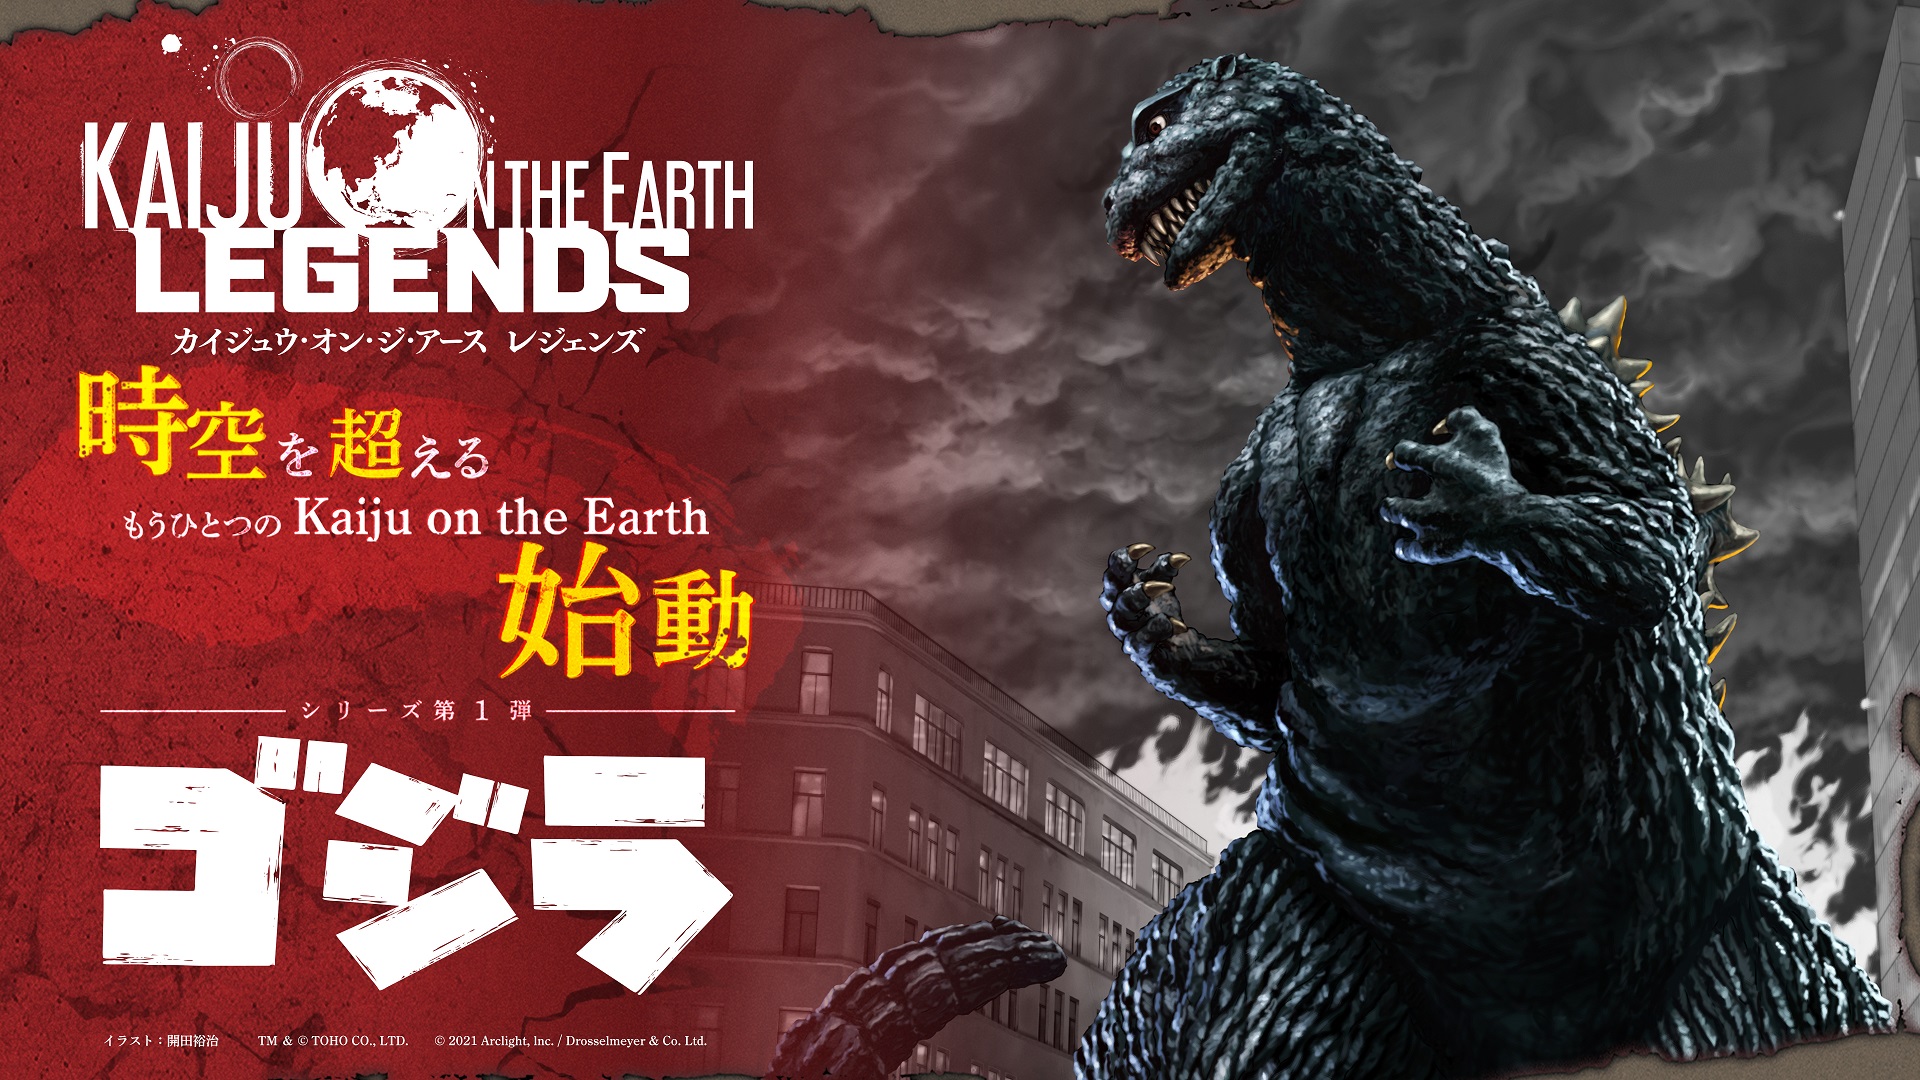 Kaiju on the Earth LEGENDS (2)